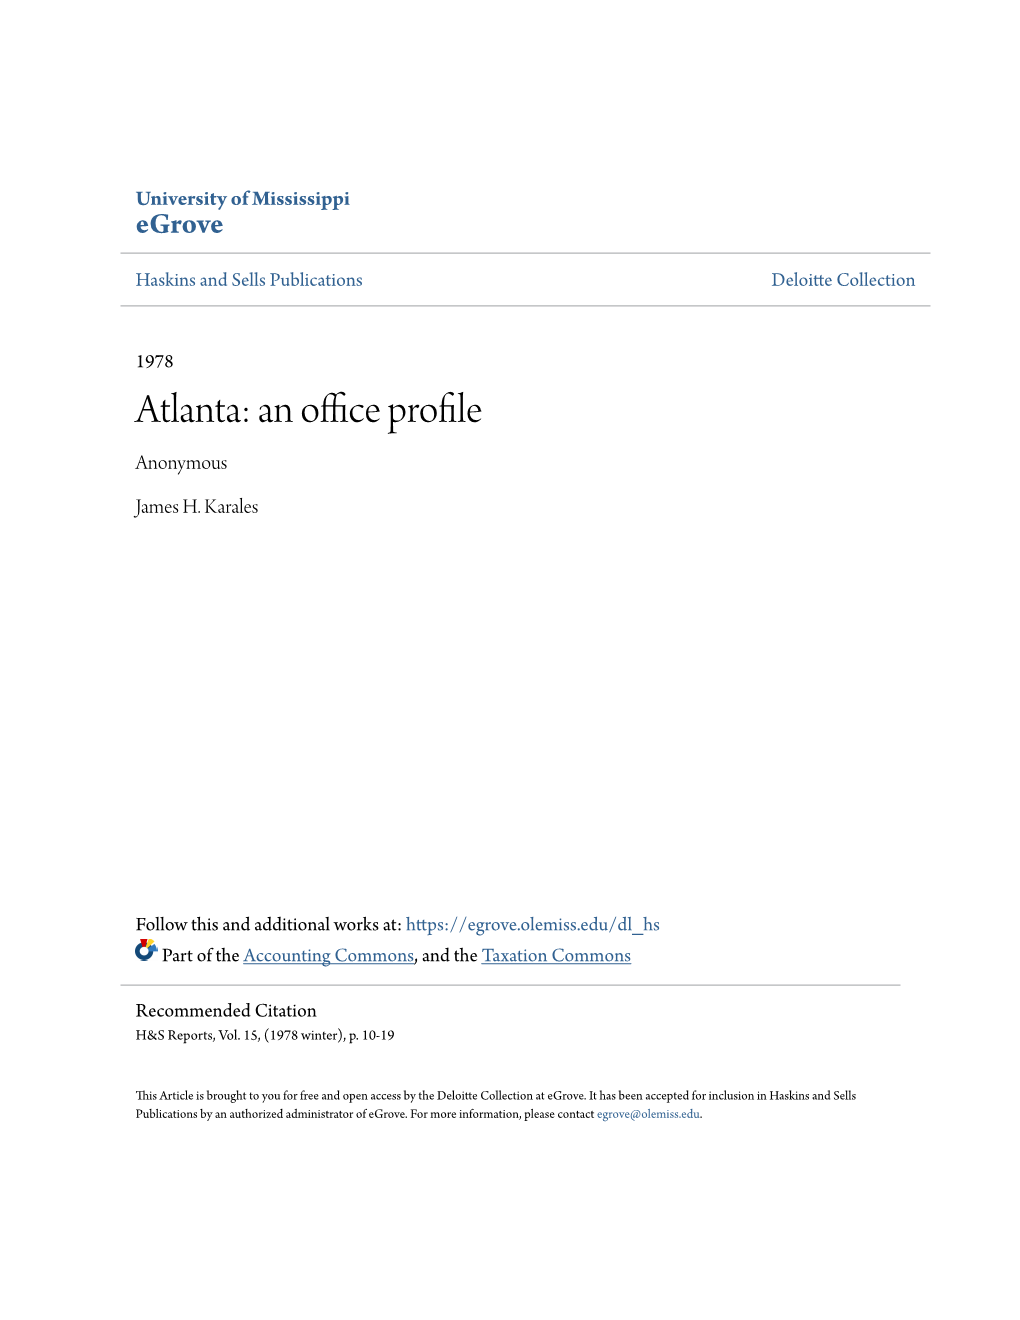 Atlanta: an Office Profile